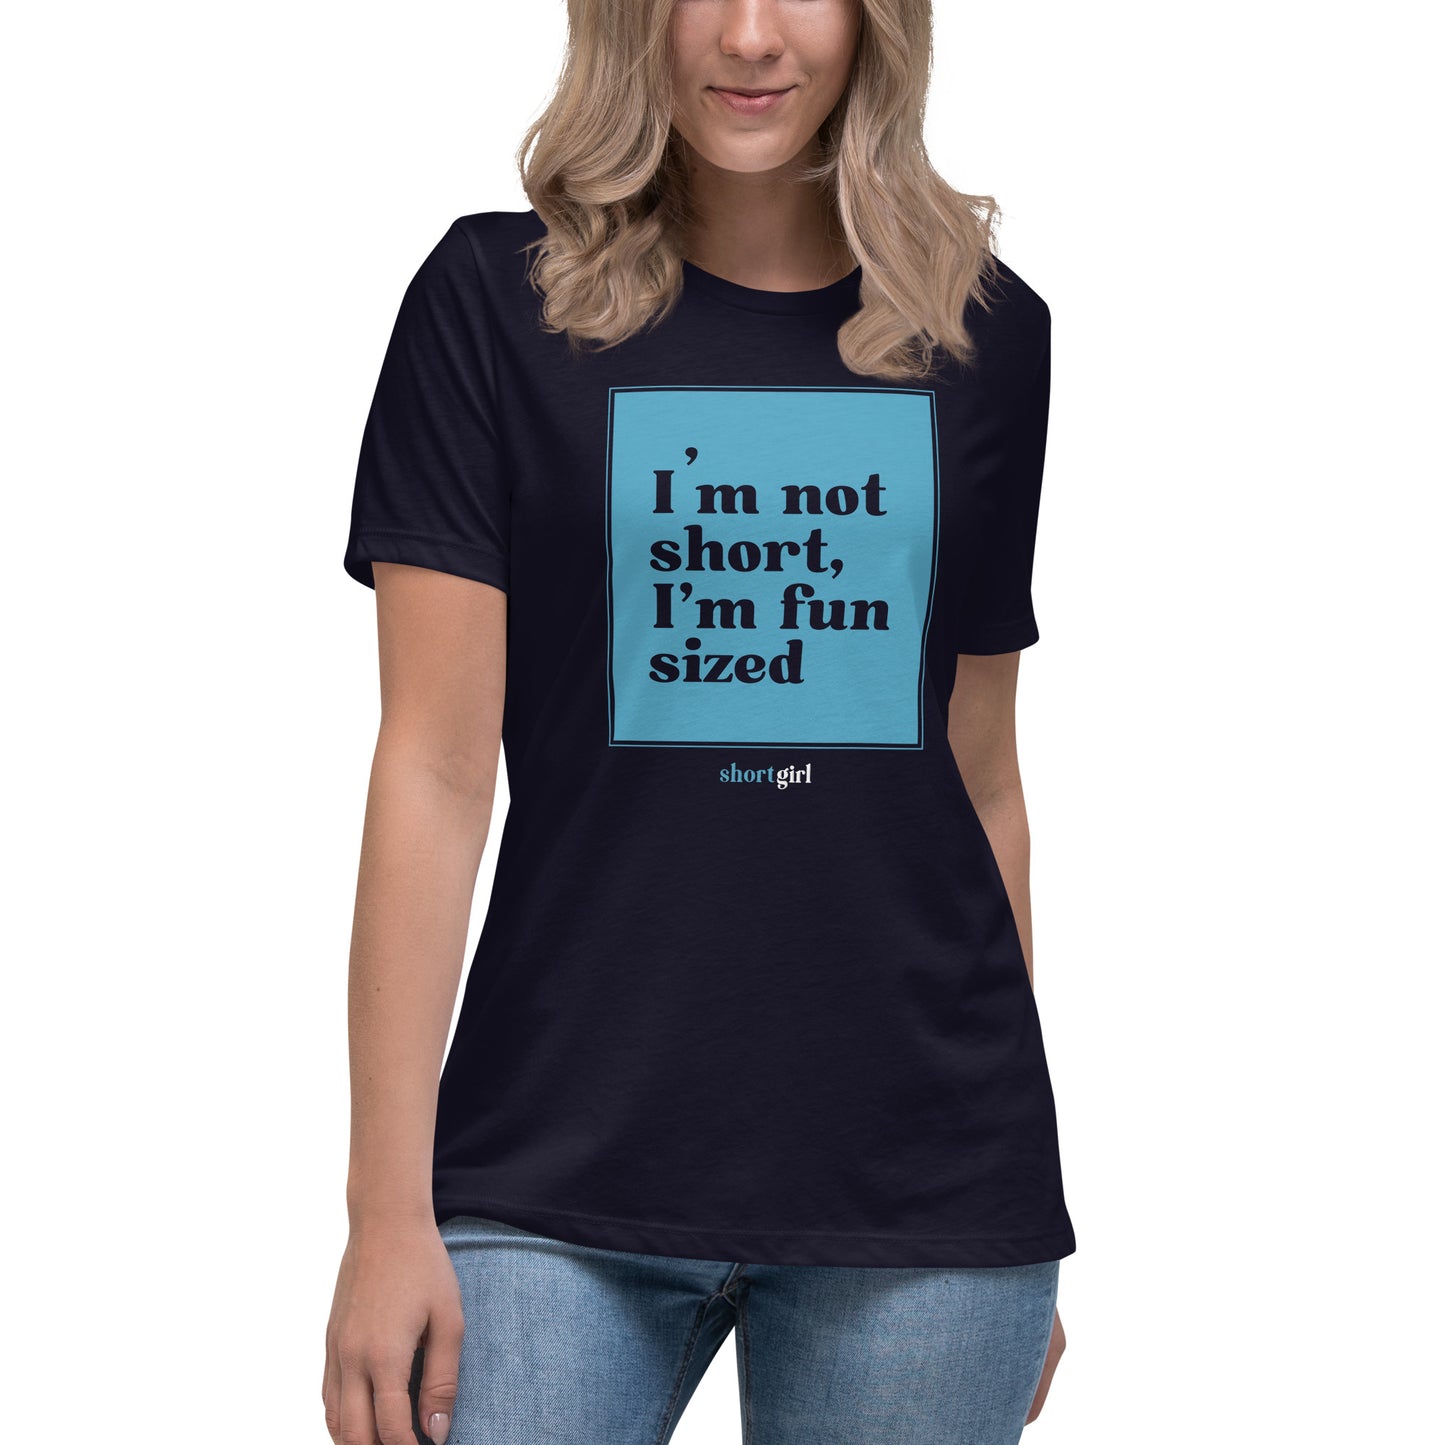 Women's Relaxed T-Shirt - I'm not short, I'm fun sized